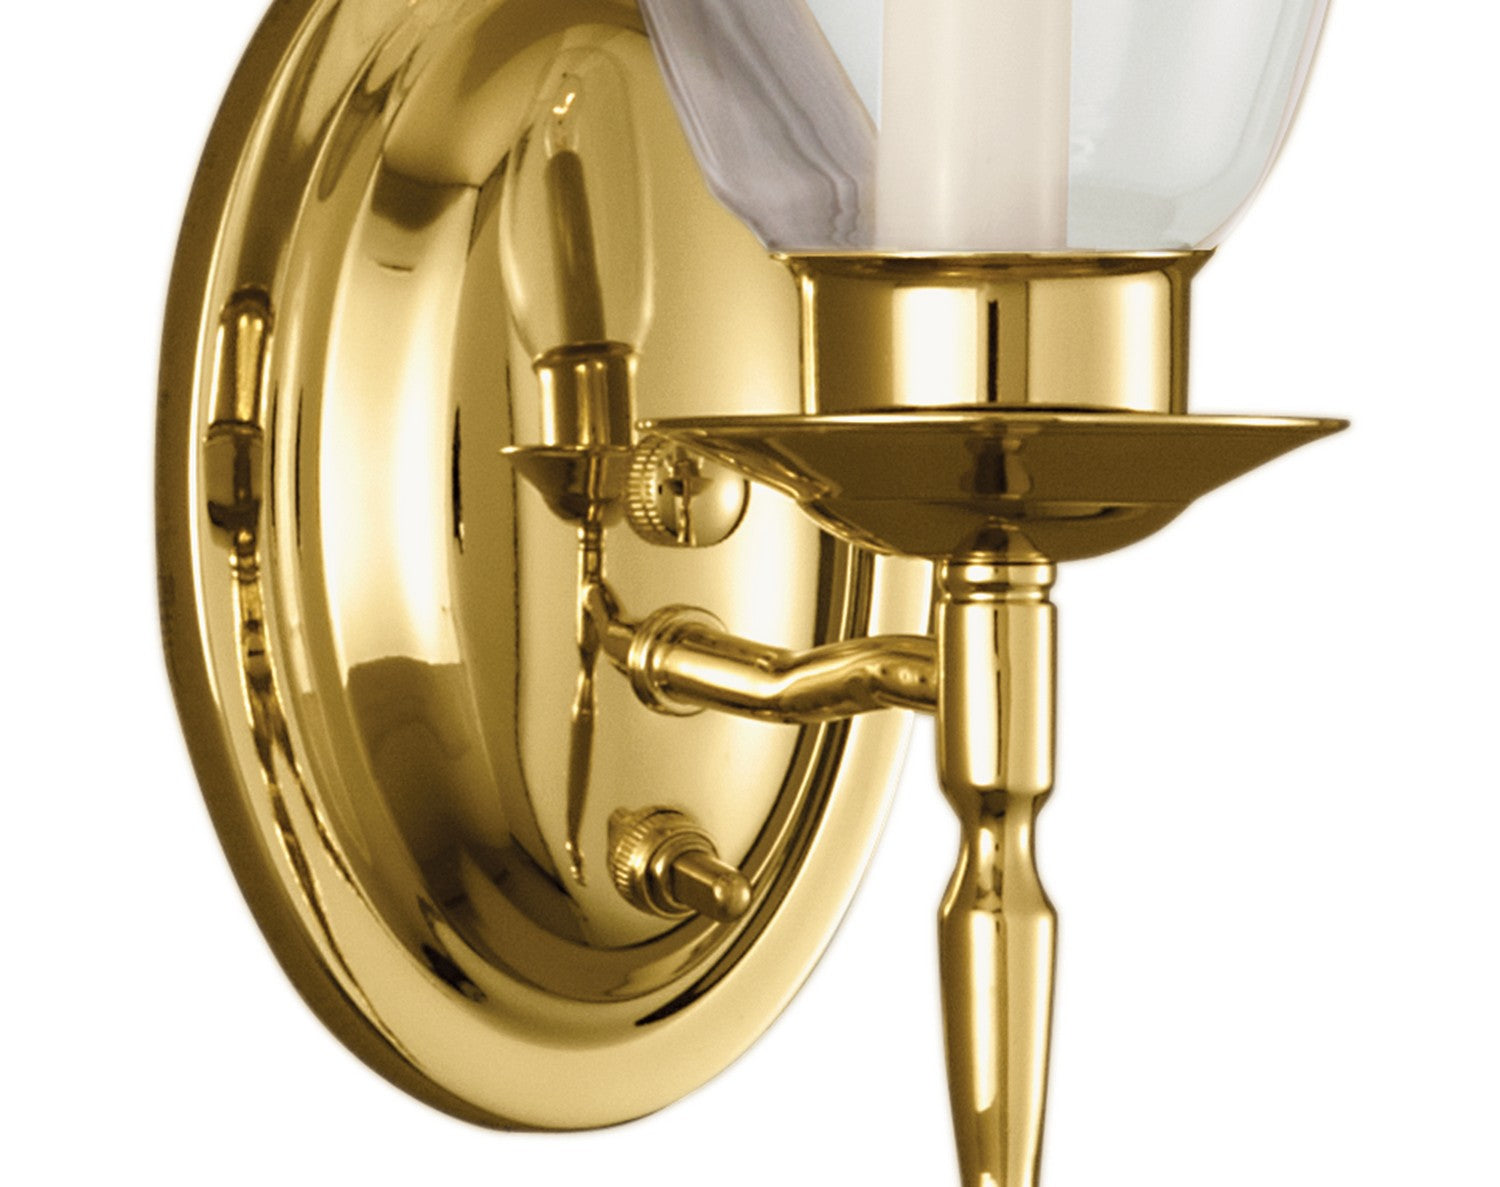 Norwell Legacy 3306-PB Wall Light - Polish Brass